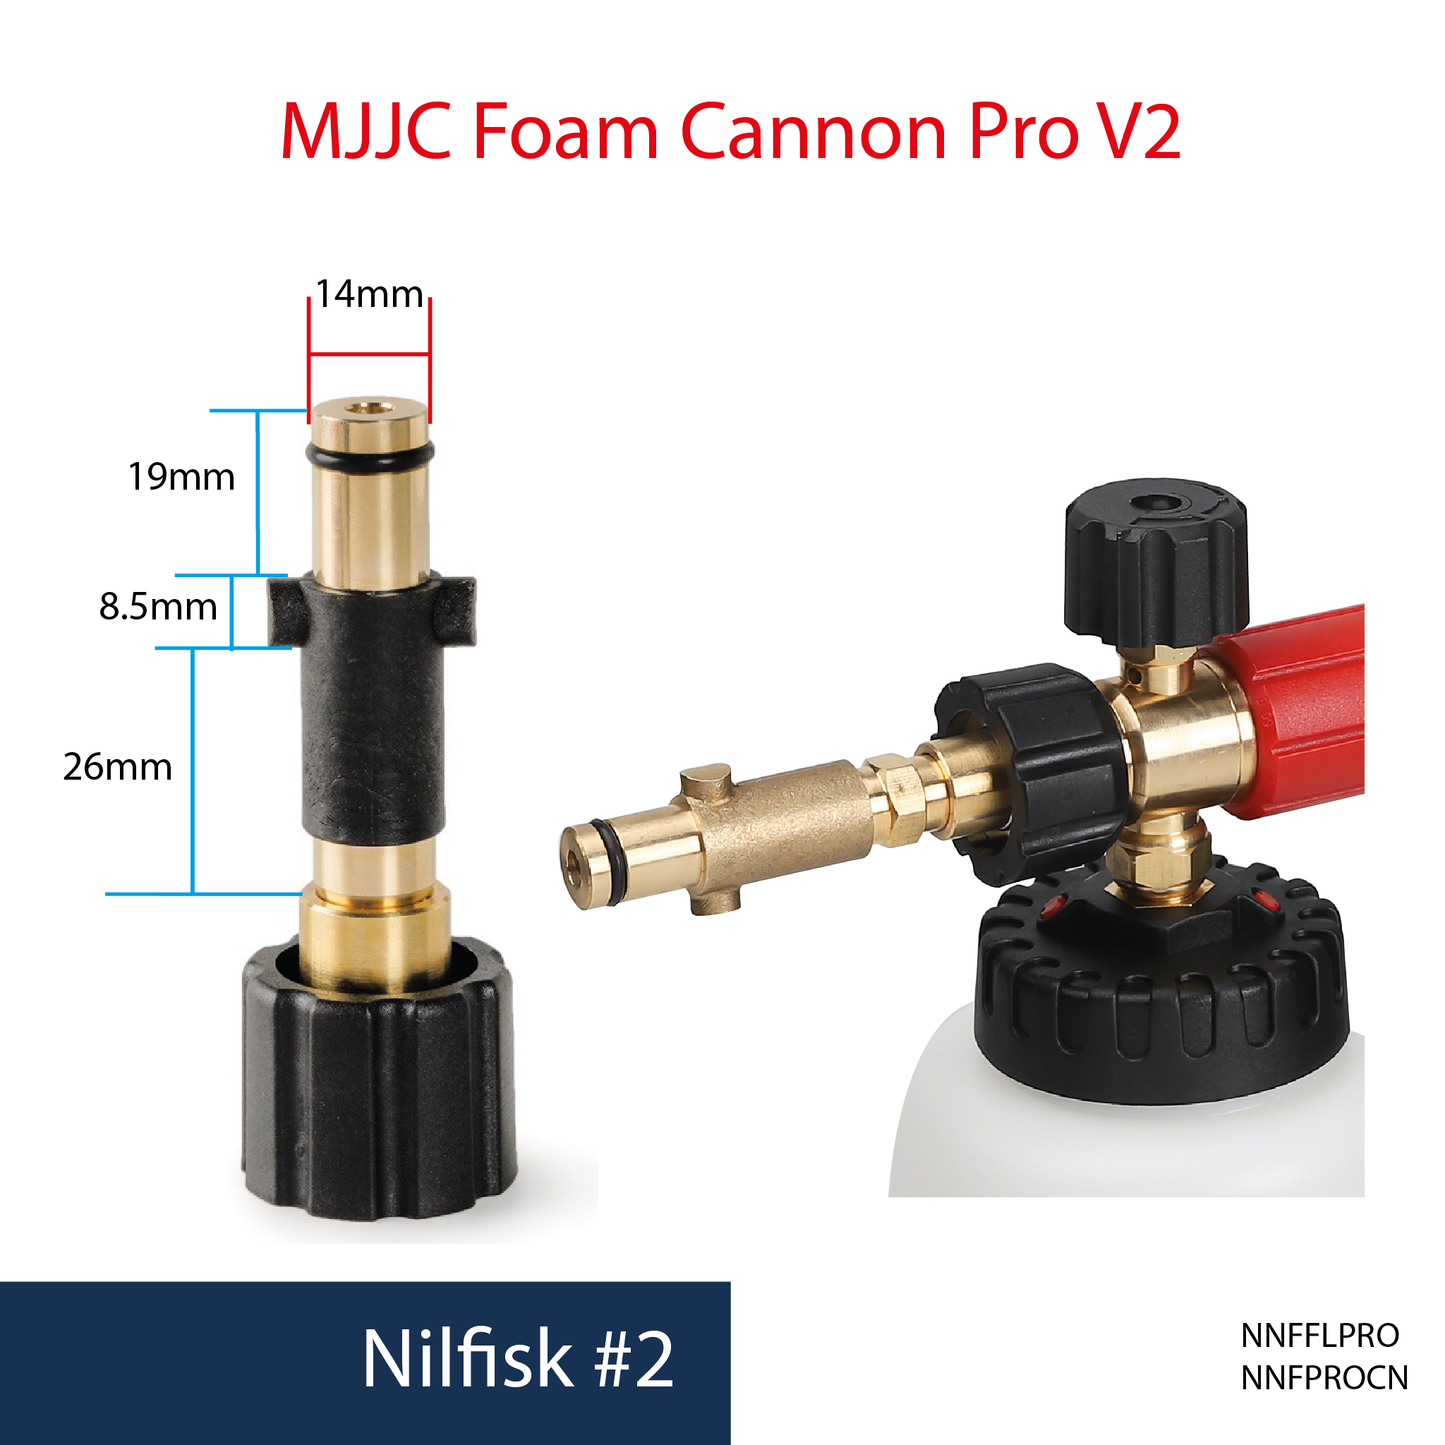 Nilfisk pressure washer - MJJC Foam Cannon Pro V2 (Pressure Washer Snow Foam Lance Gun)